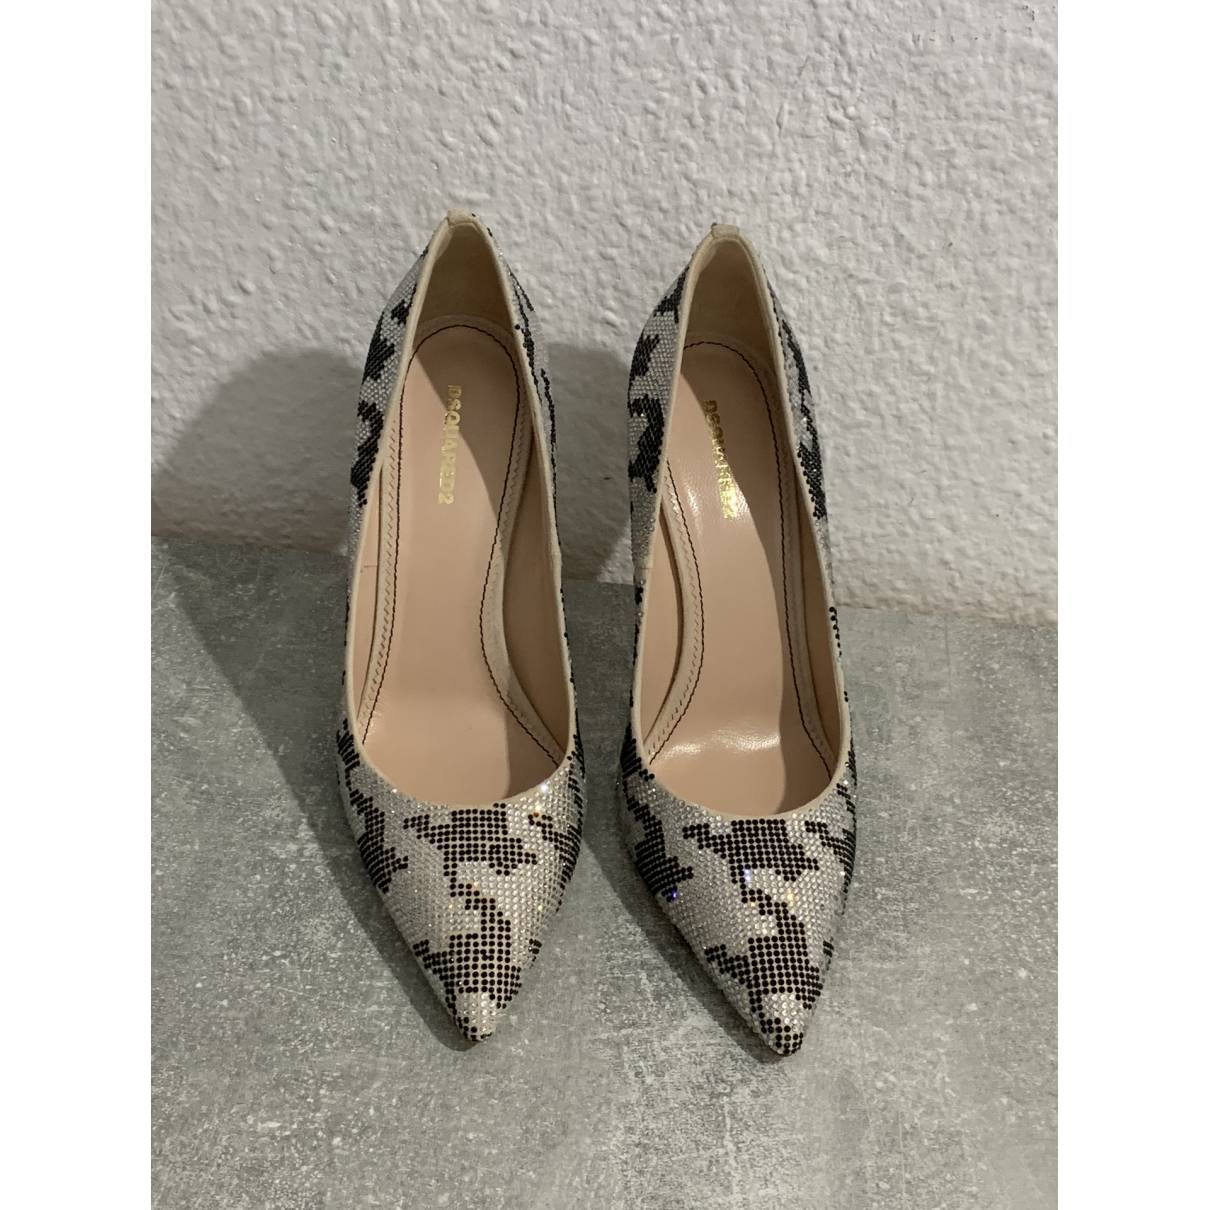 Buy Dsquared2 Glitter heels online